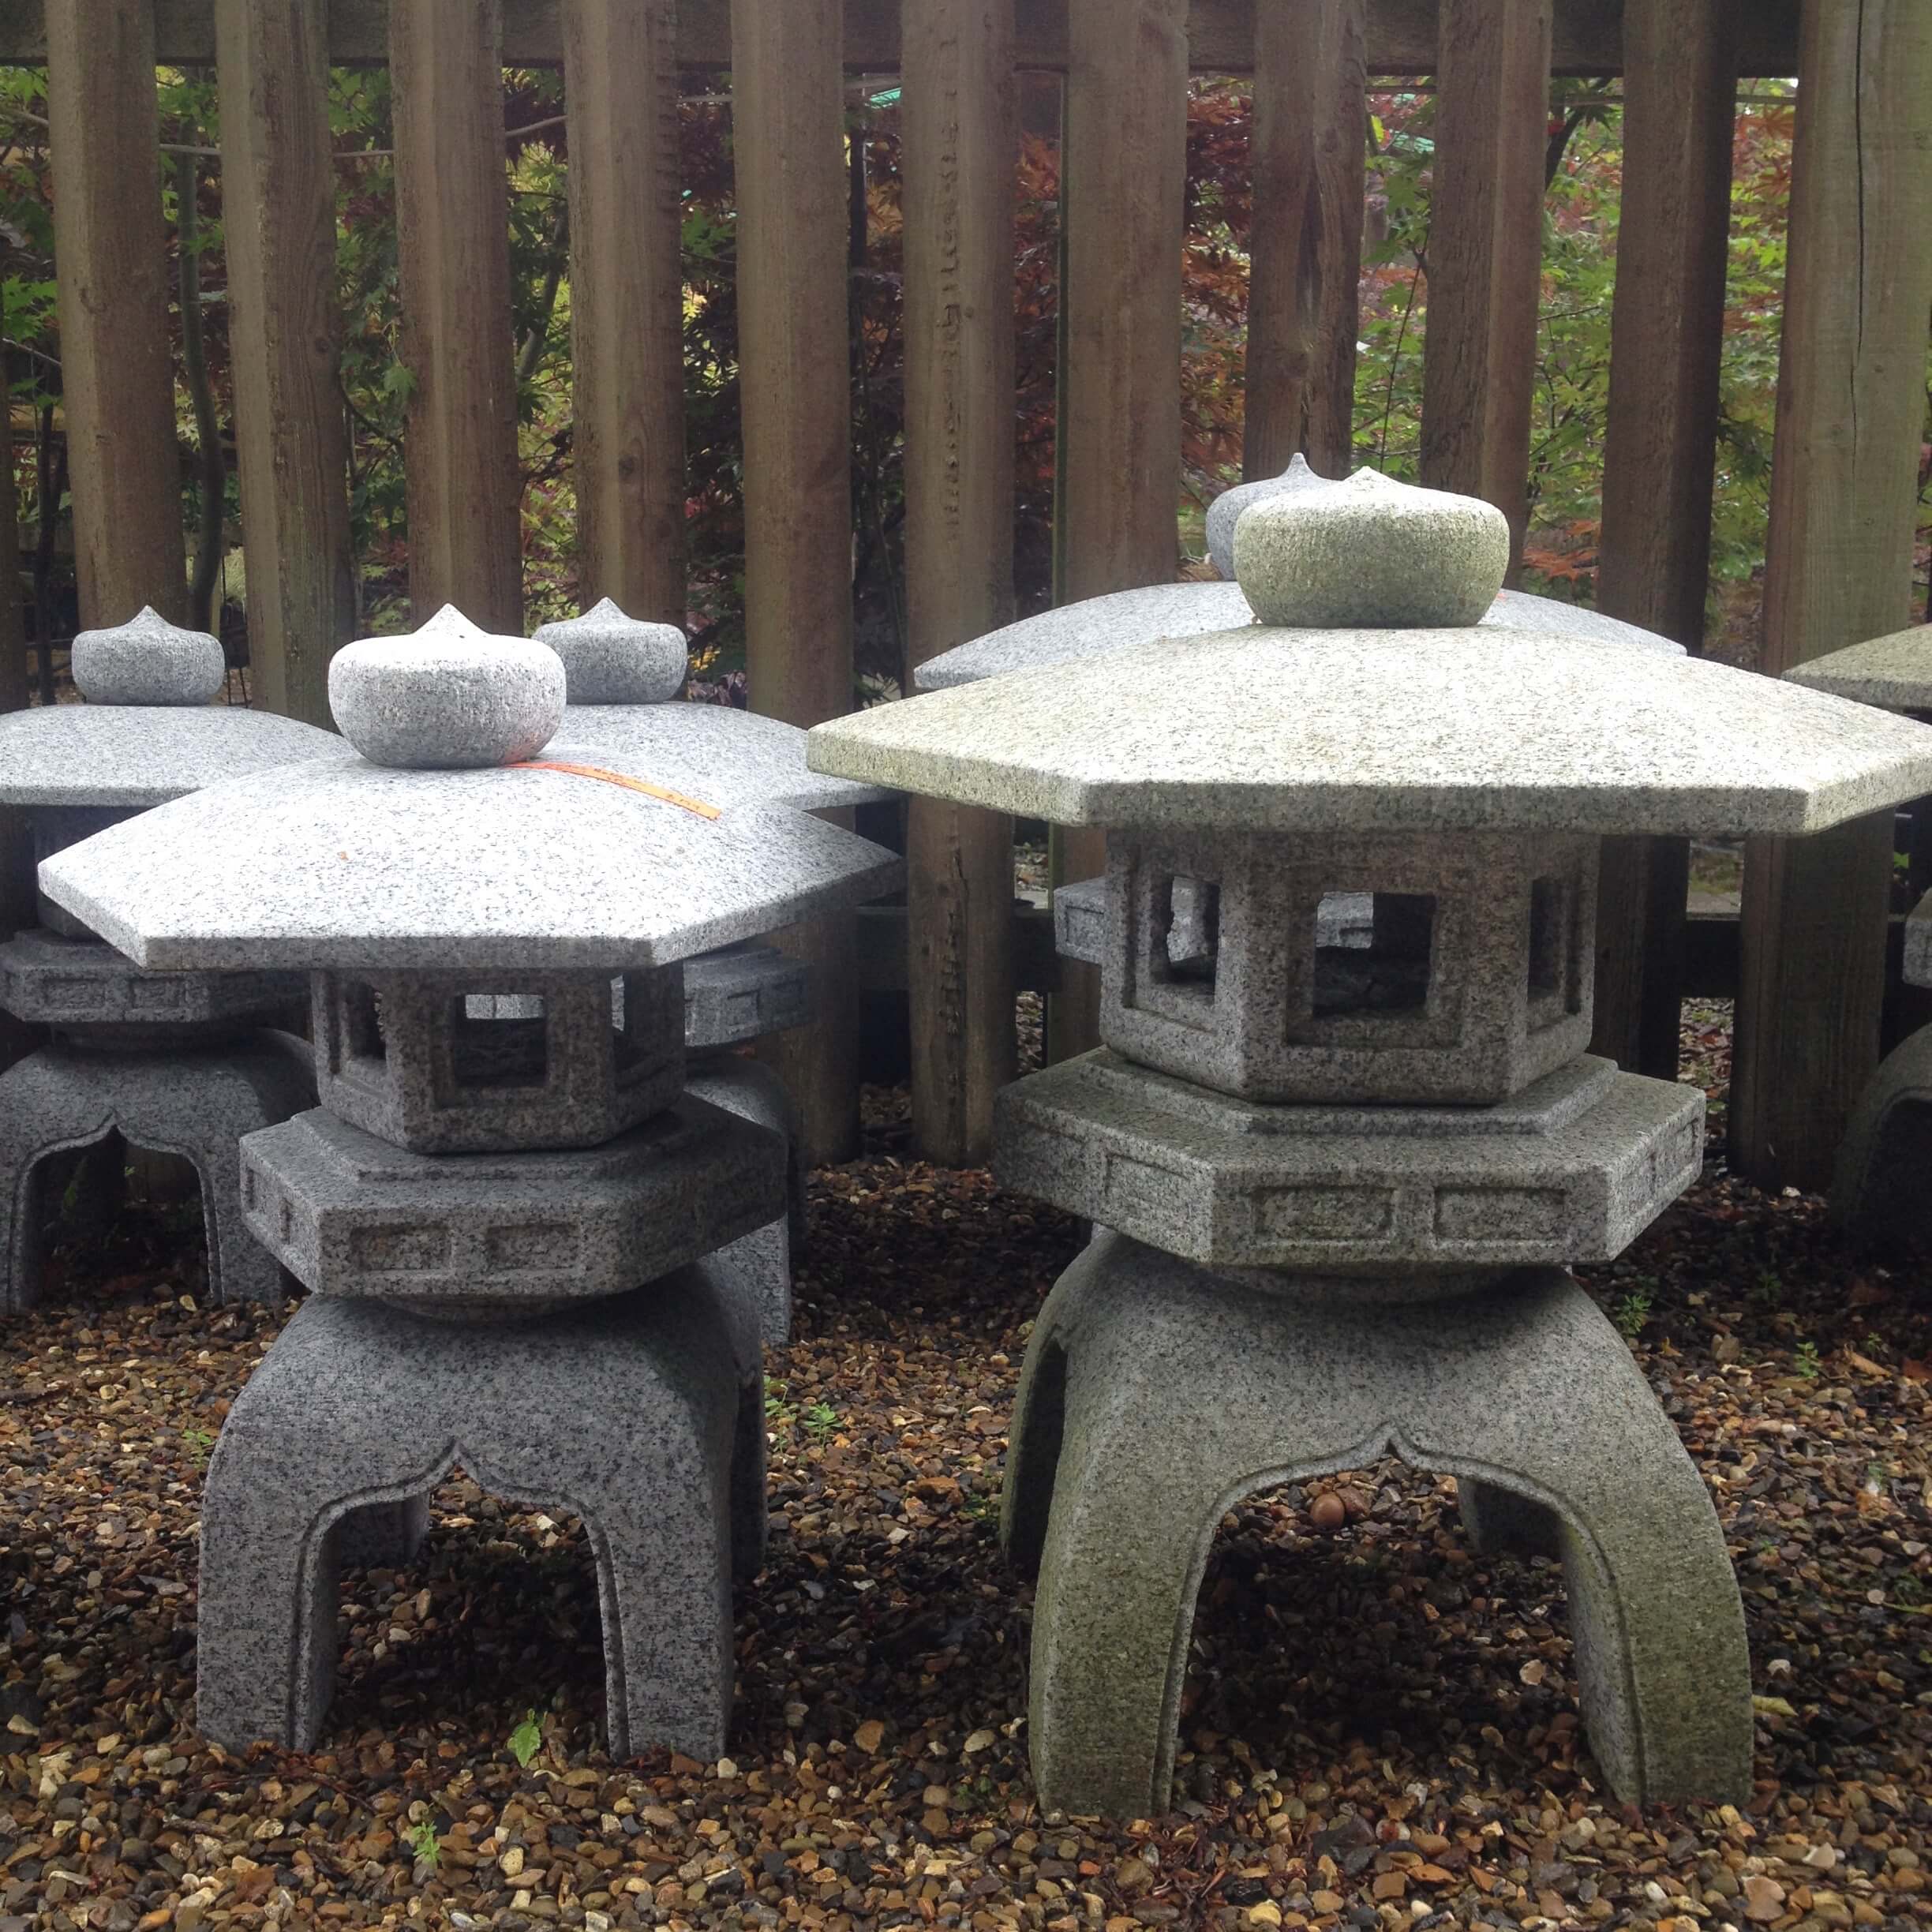 Kodai Rokkaku Yukimi Japanese Stone Lantern For Oriental Gardens - Kyoto Range